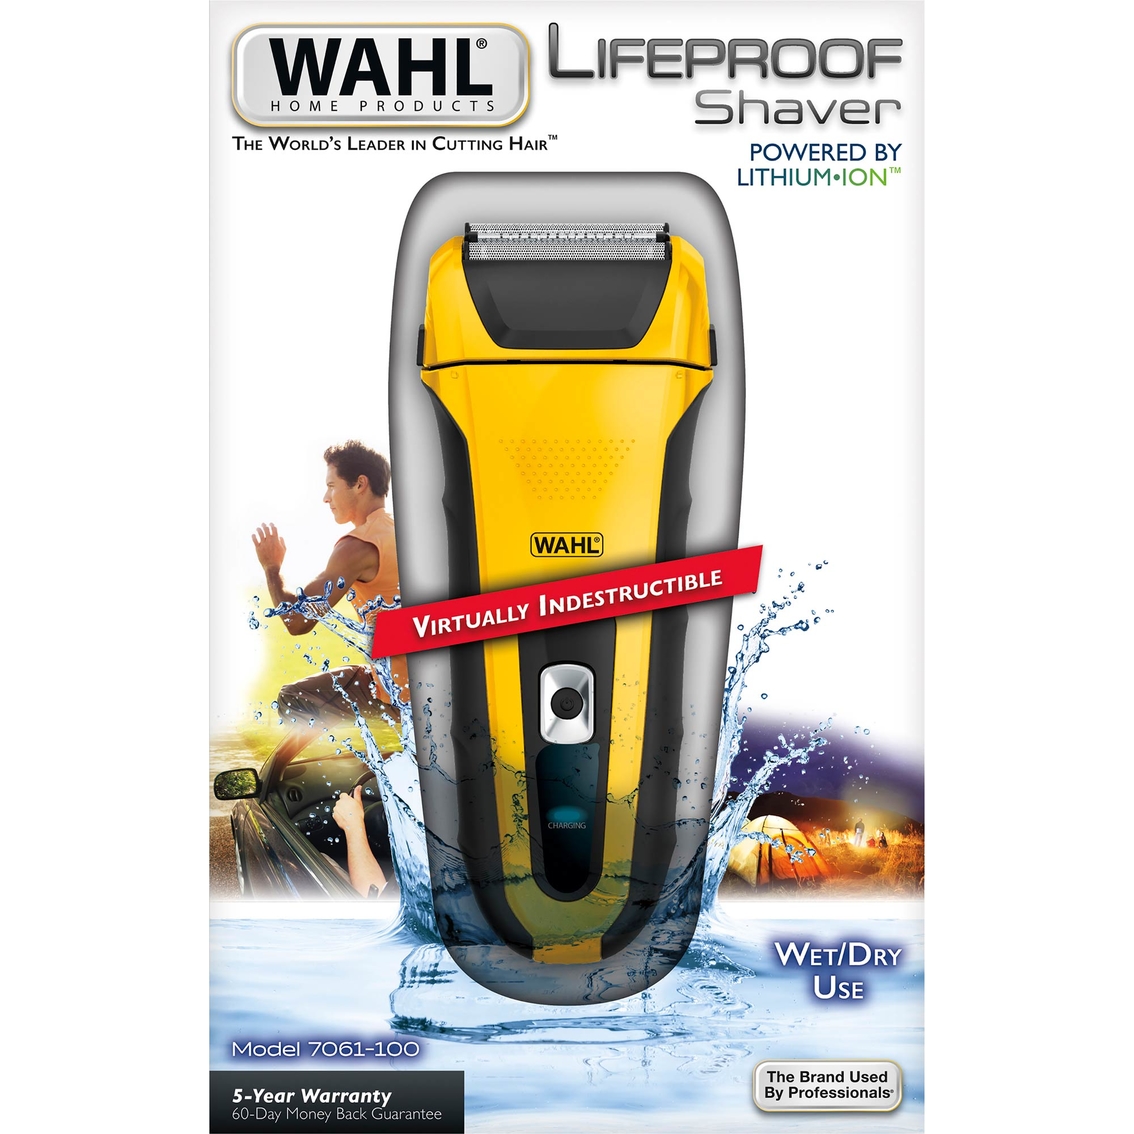 Wahl Lifeproof Shaver - Image 3 of 3